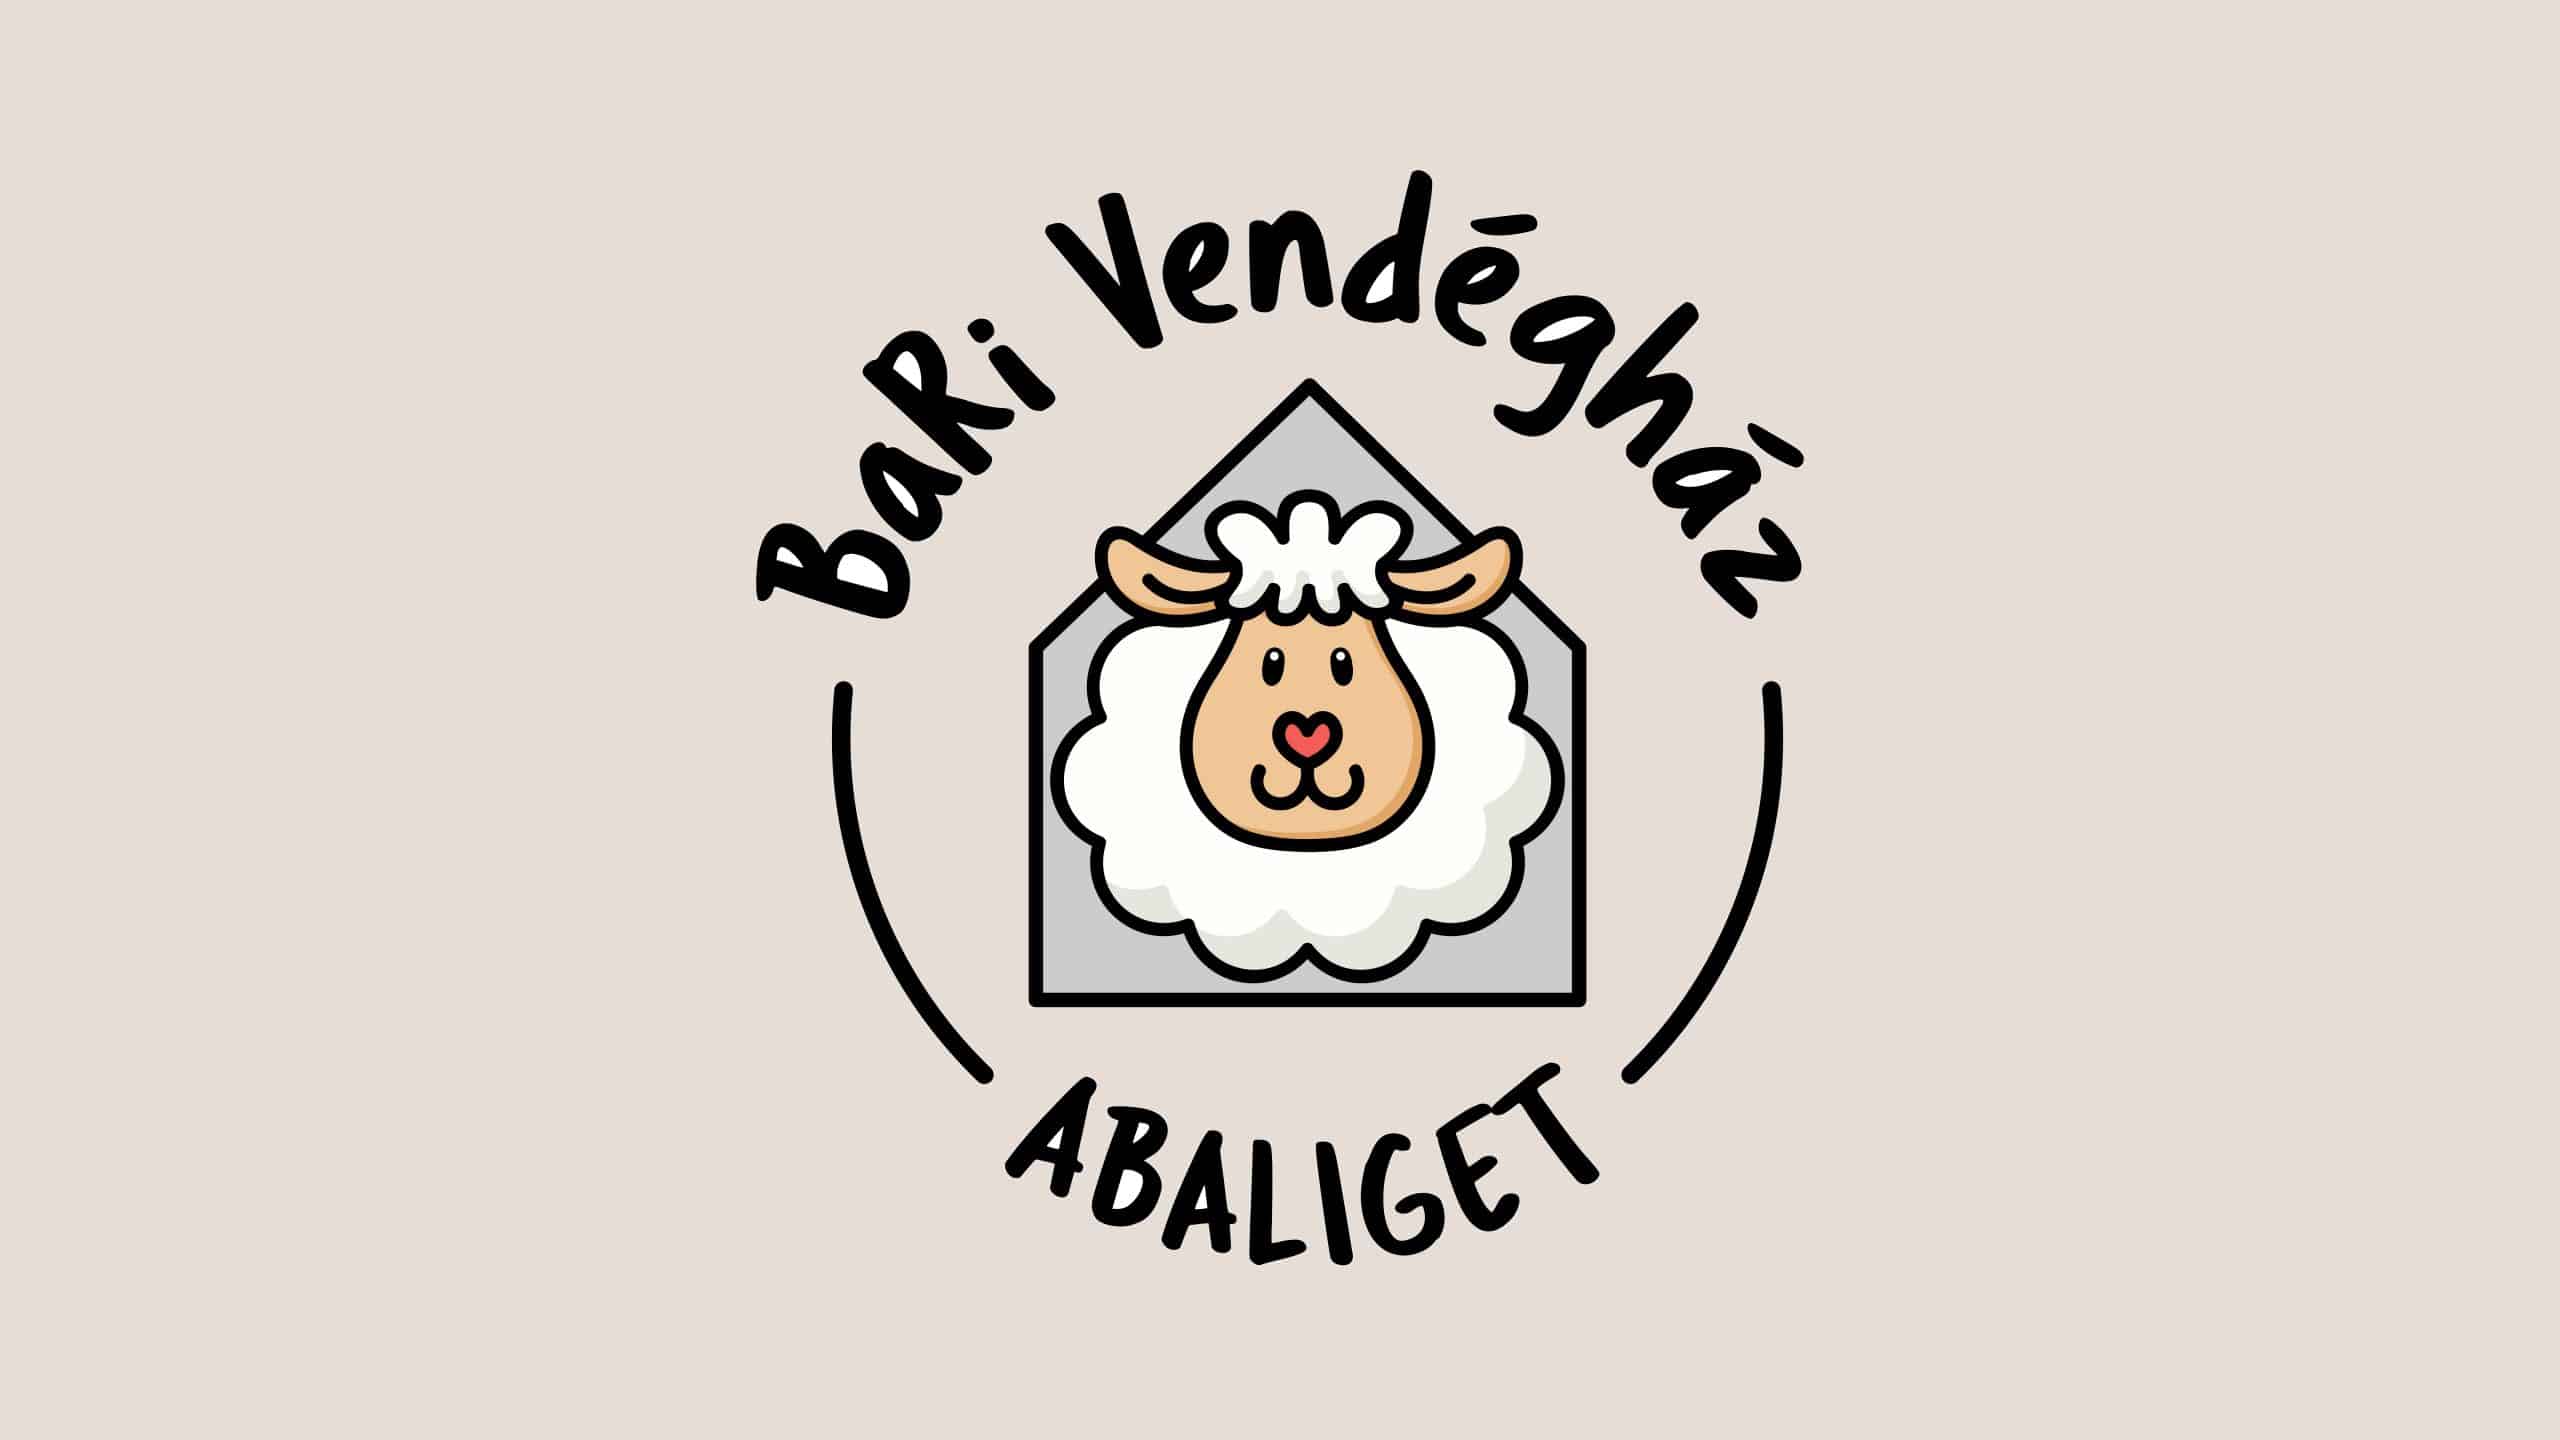 BaRi_Vendeghaz_logo_FINAL_szines (1)